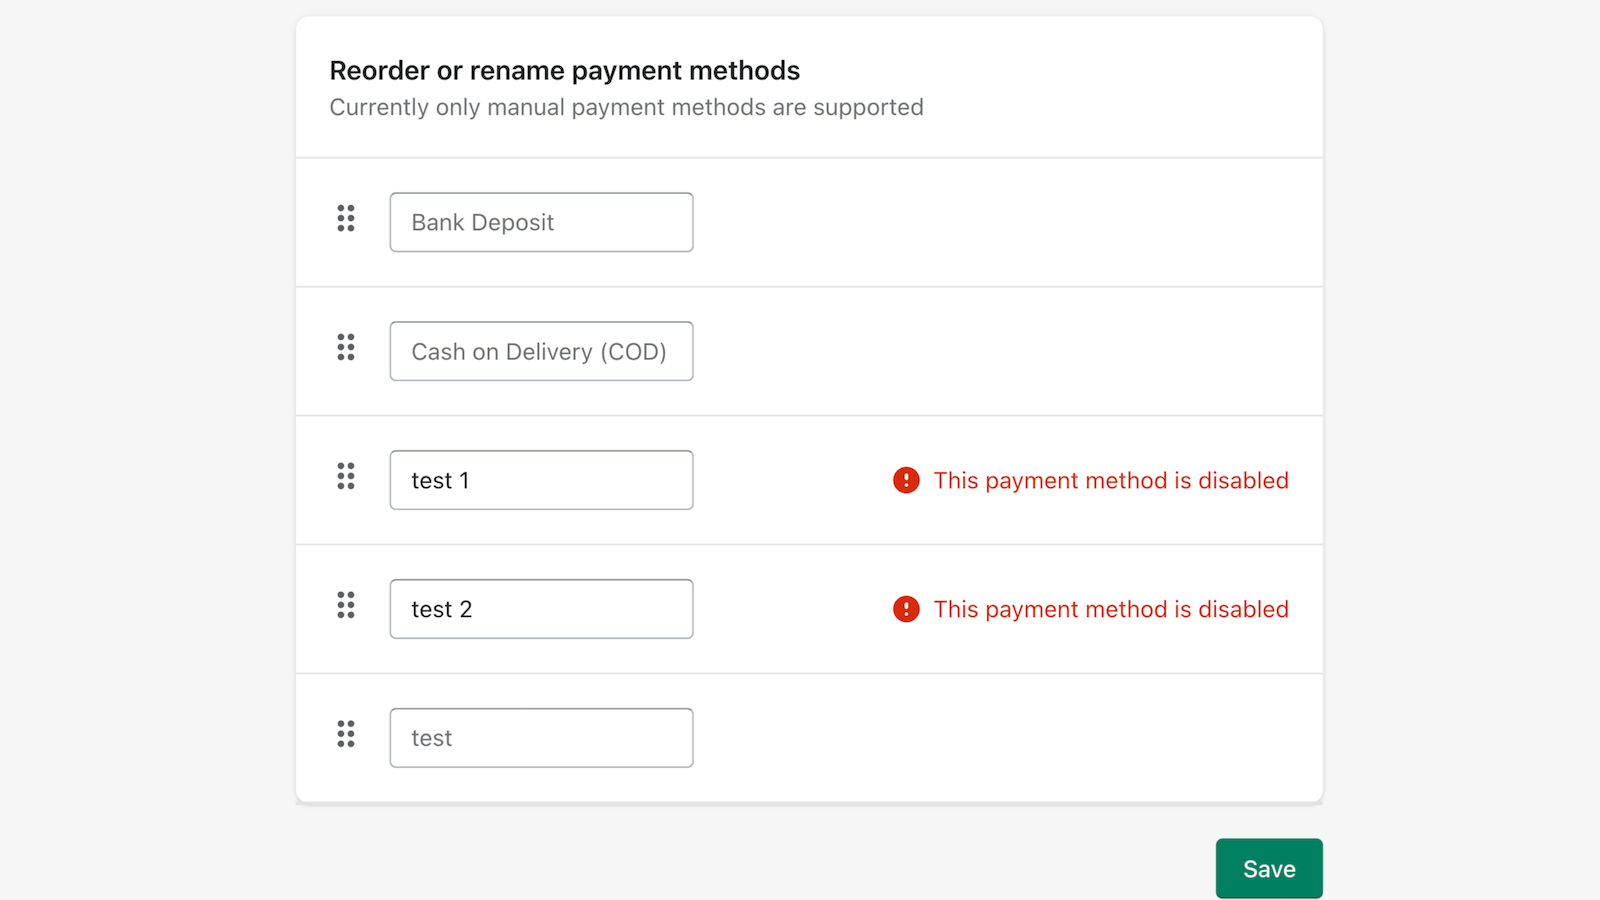 Reorder or rename payment methods